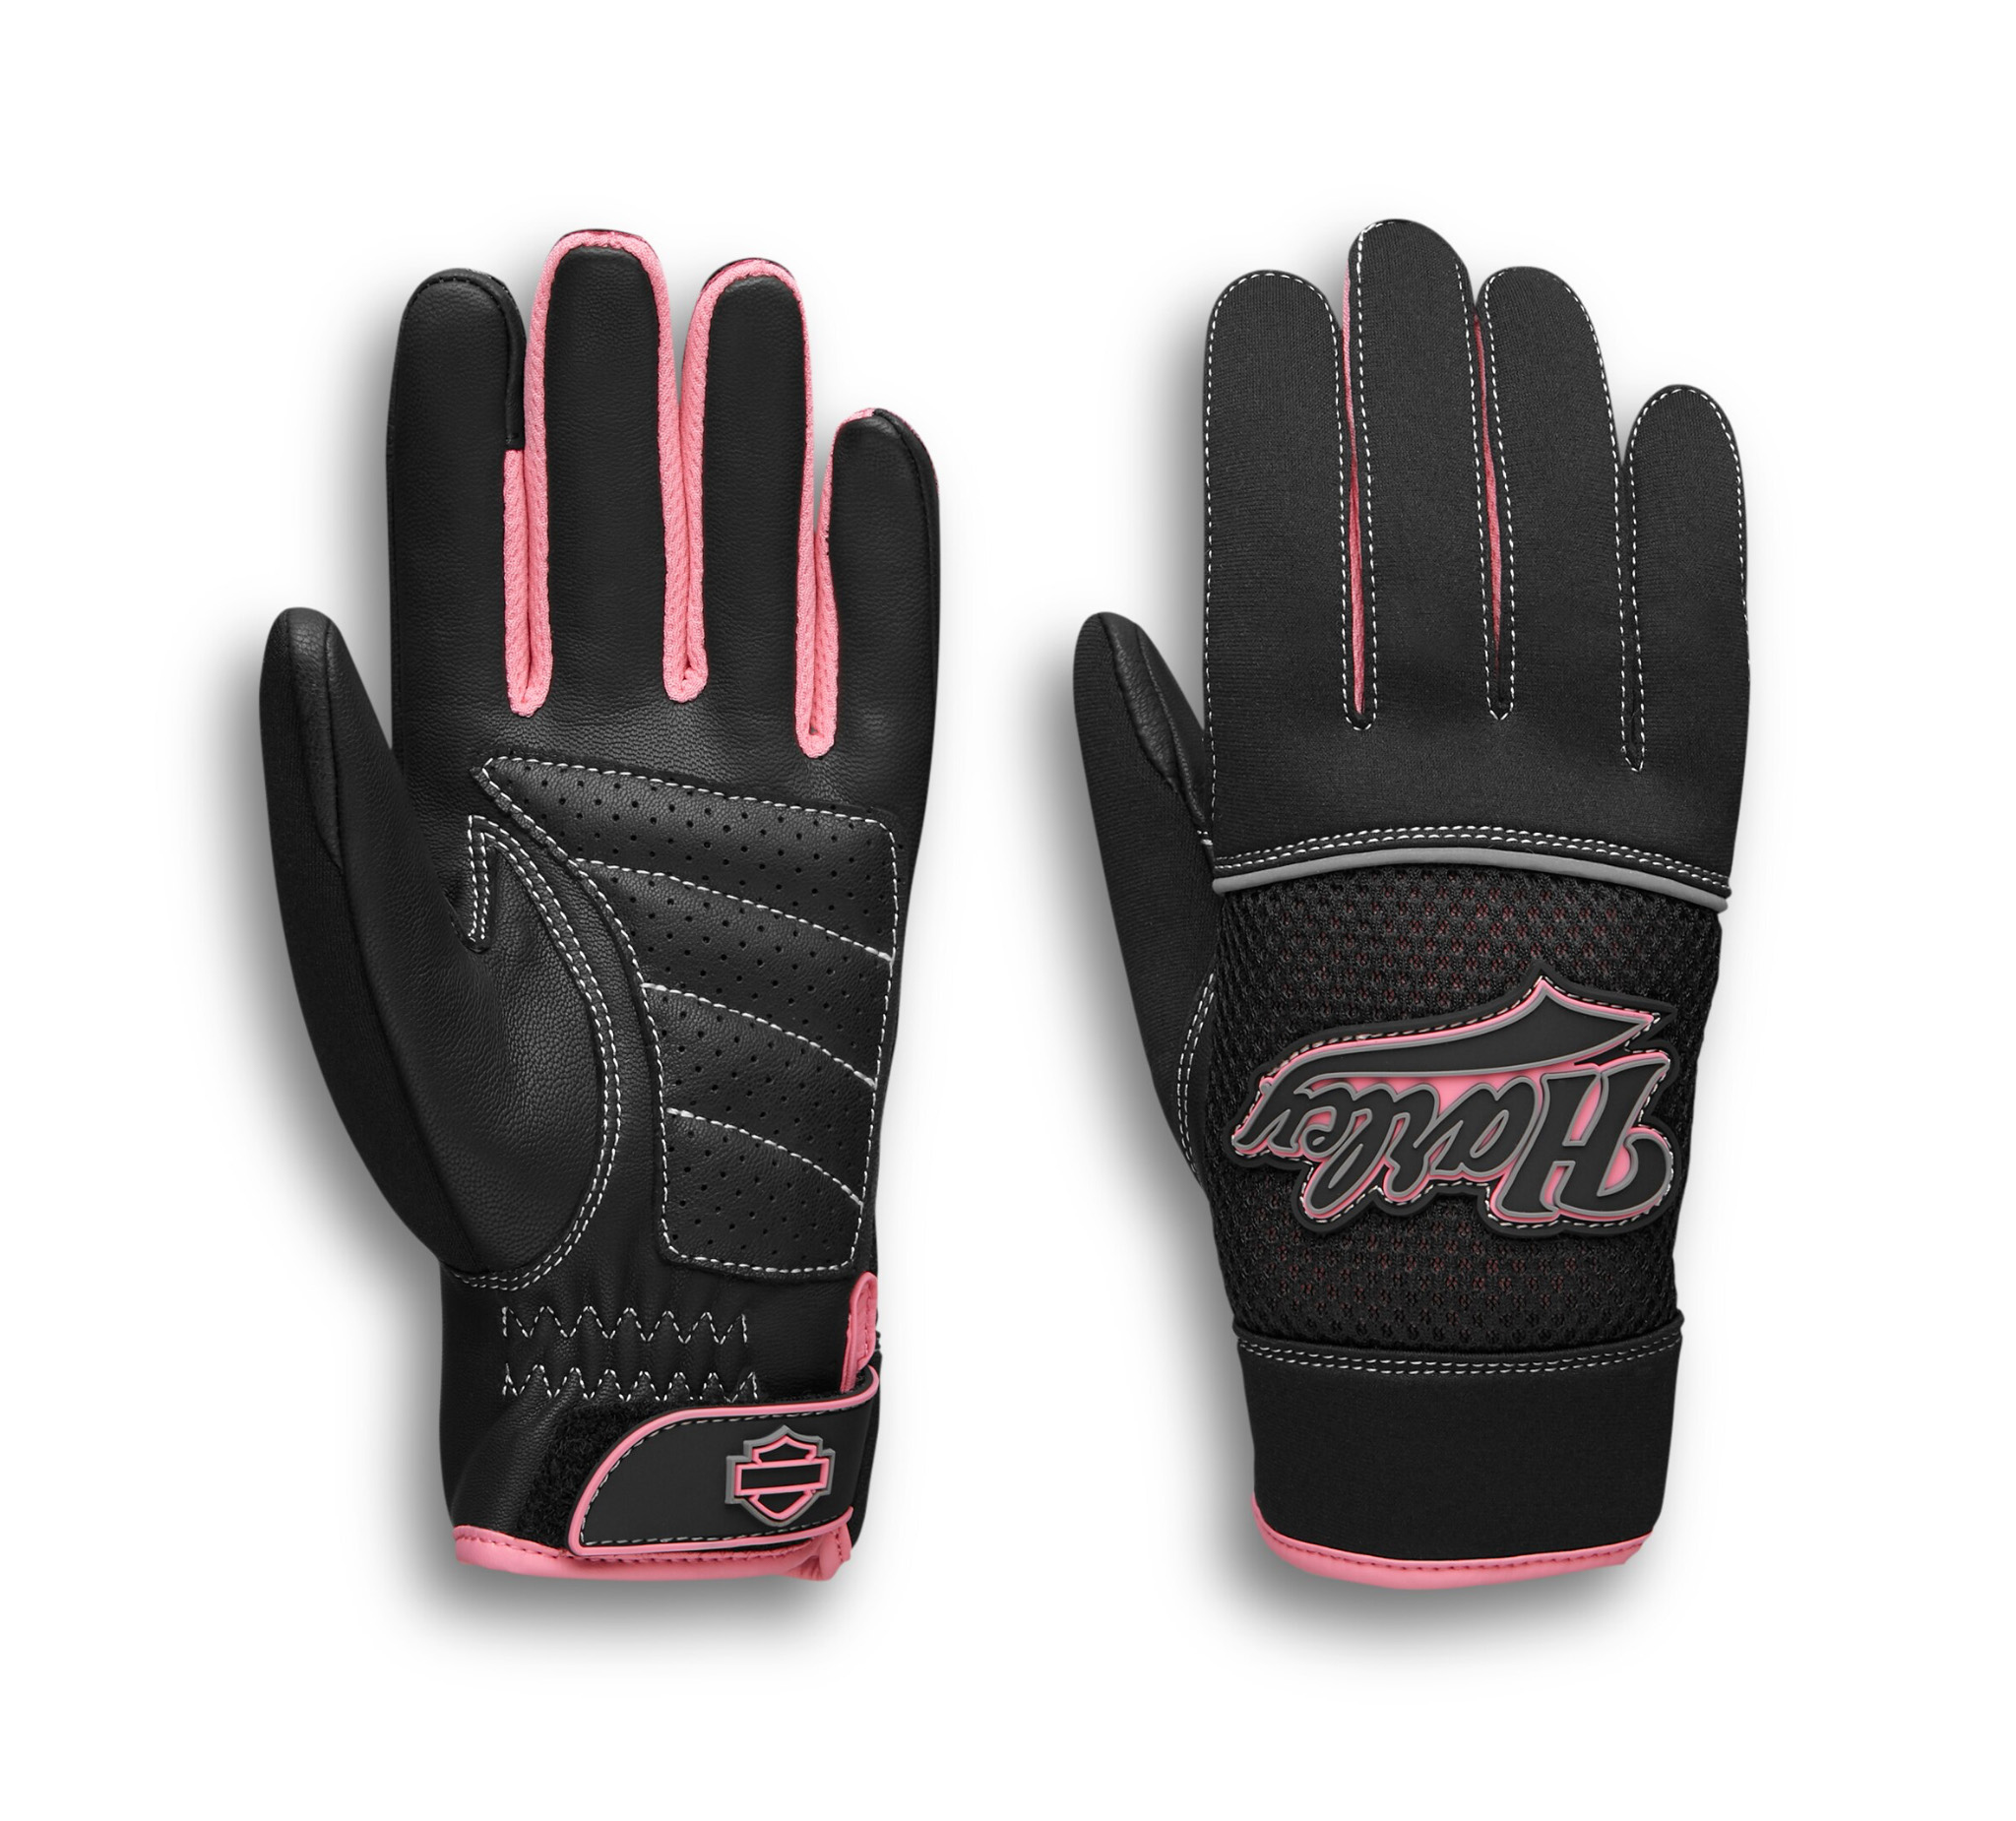 Women S Pink Label Mixed Media Gloves 98131 20vw Harley Davidson Australia